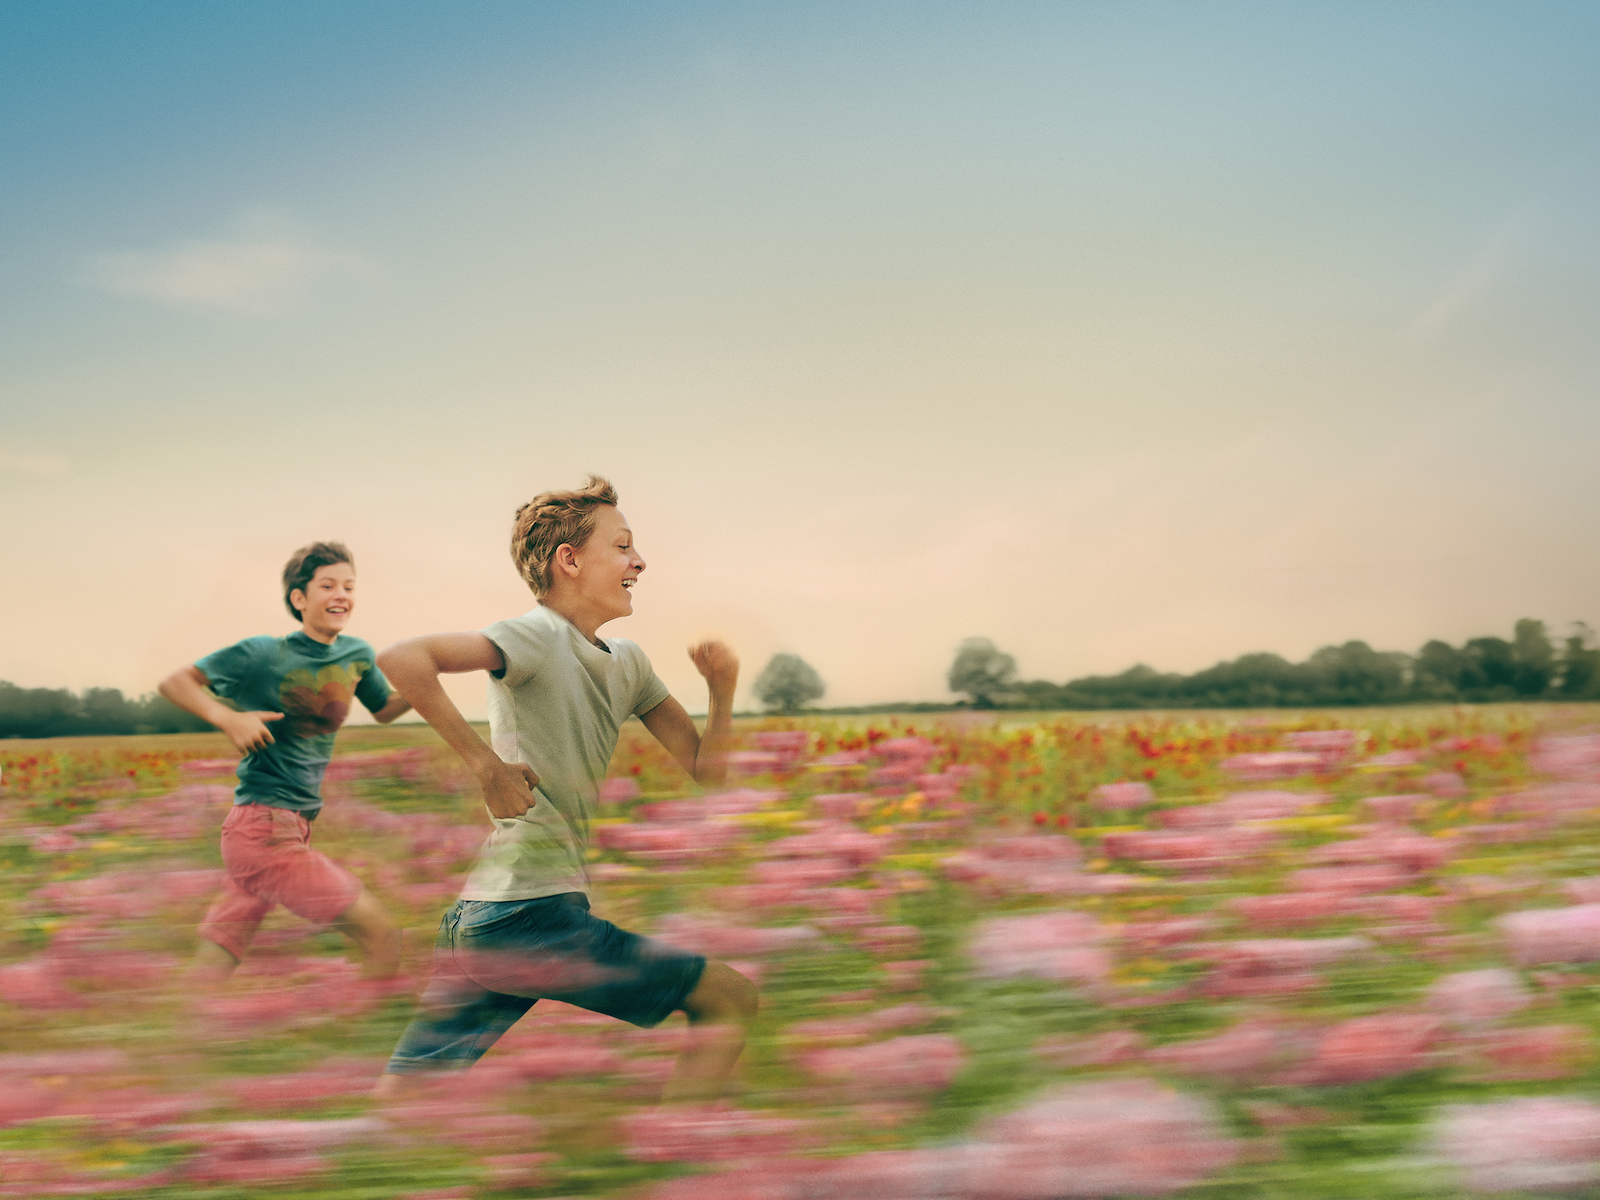 Two children run in a field of flowers.